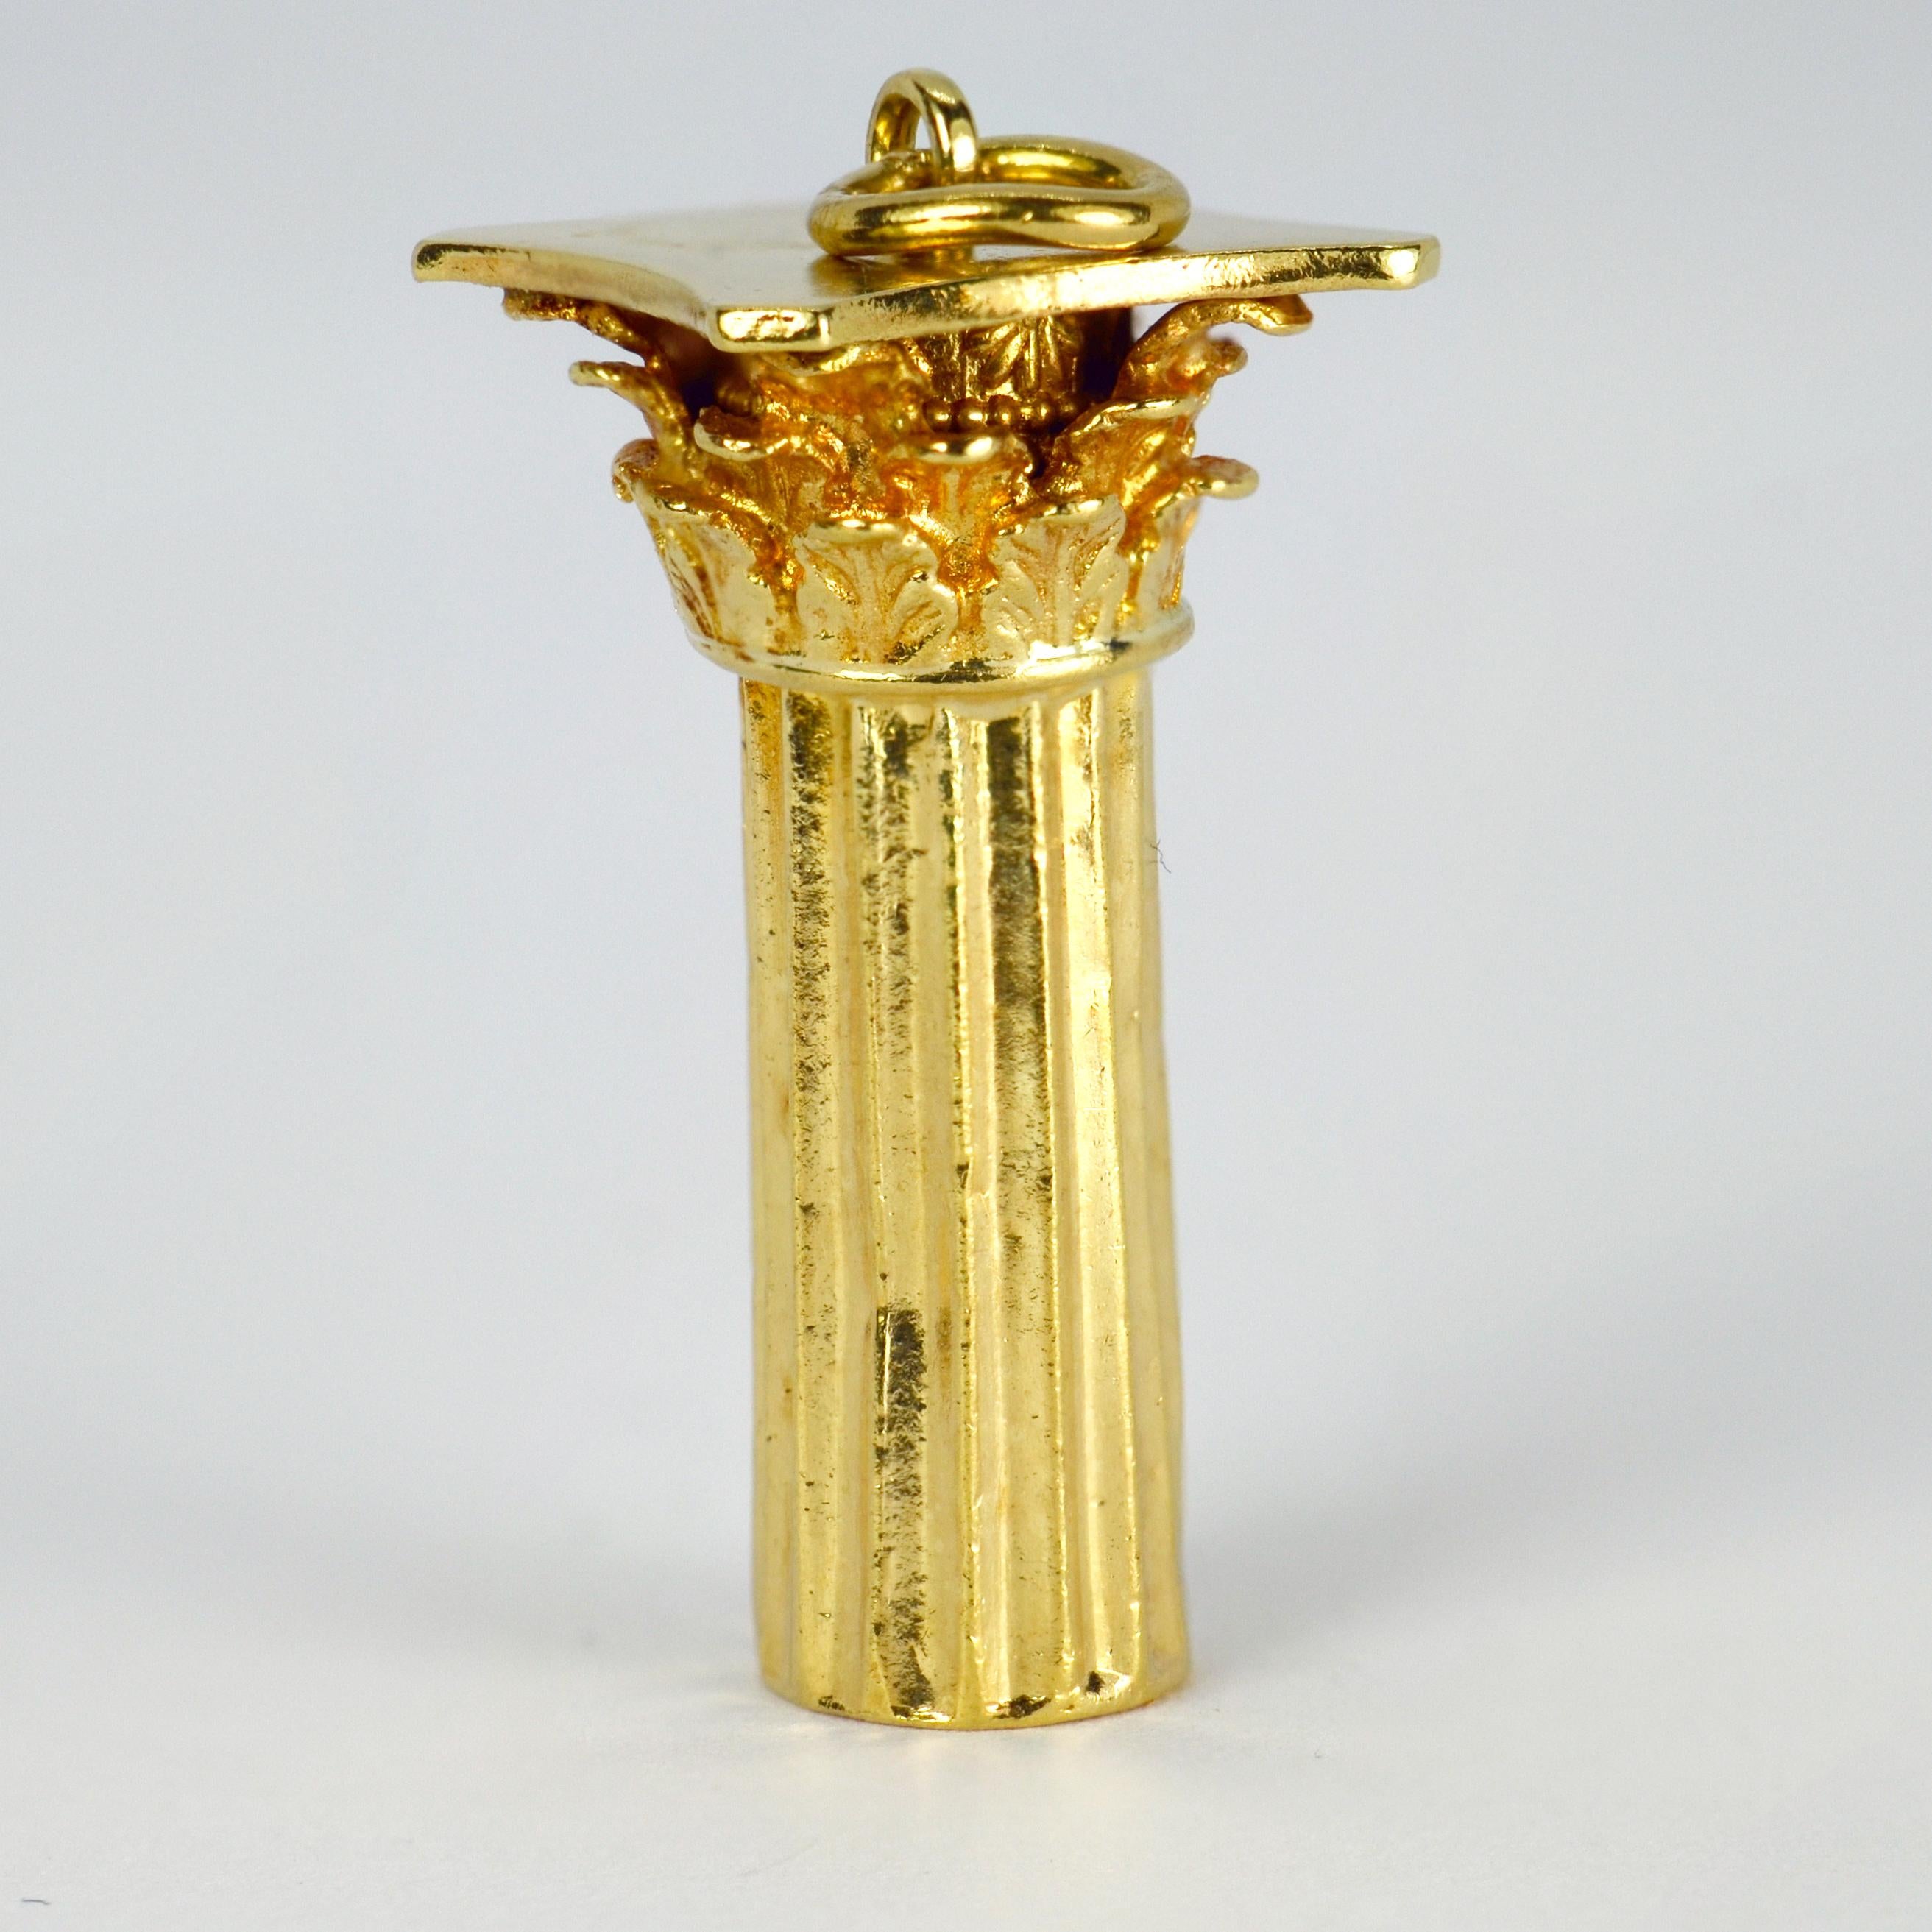 An 18 karat (18K) yellow gold charm pendant designed as an ancient Roman Corinthian column. Stamped K18 for 18 karat gold.

Dimensions: 2.8 x 1.3 x 1.3 cm (not including jump ring)
Weight: 4.06 grams
